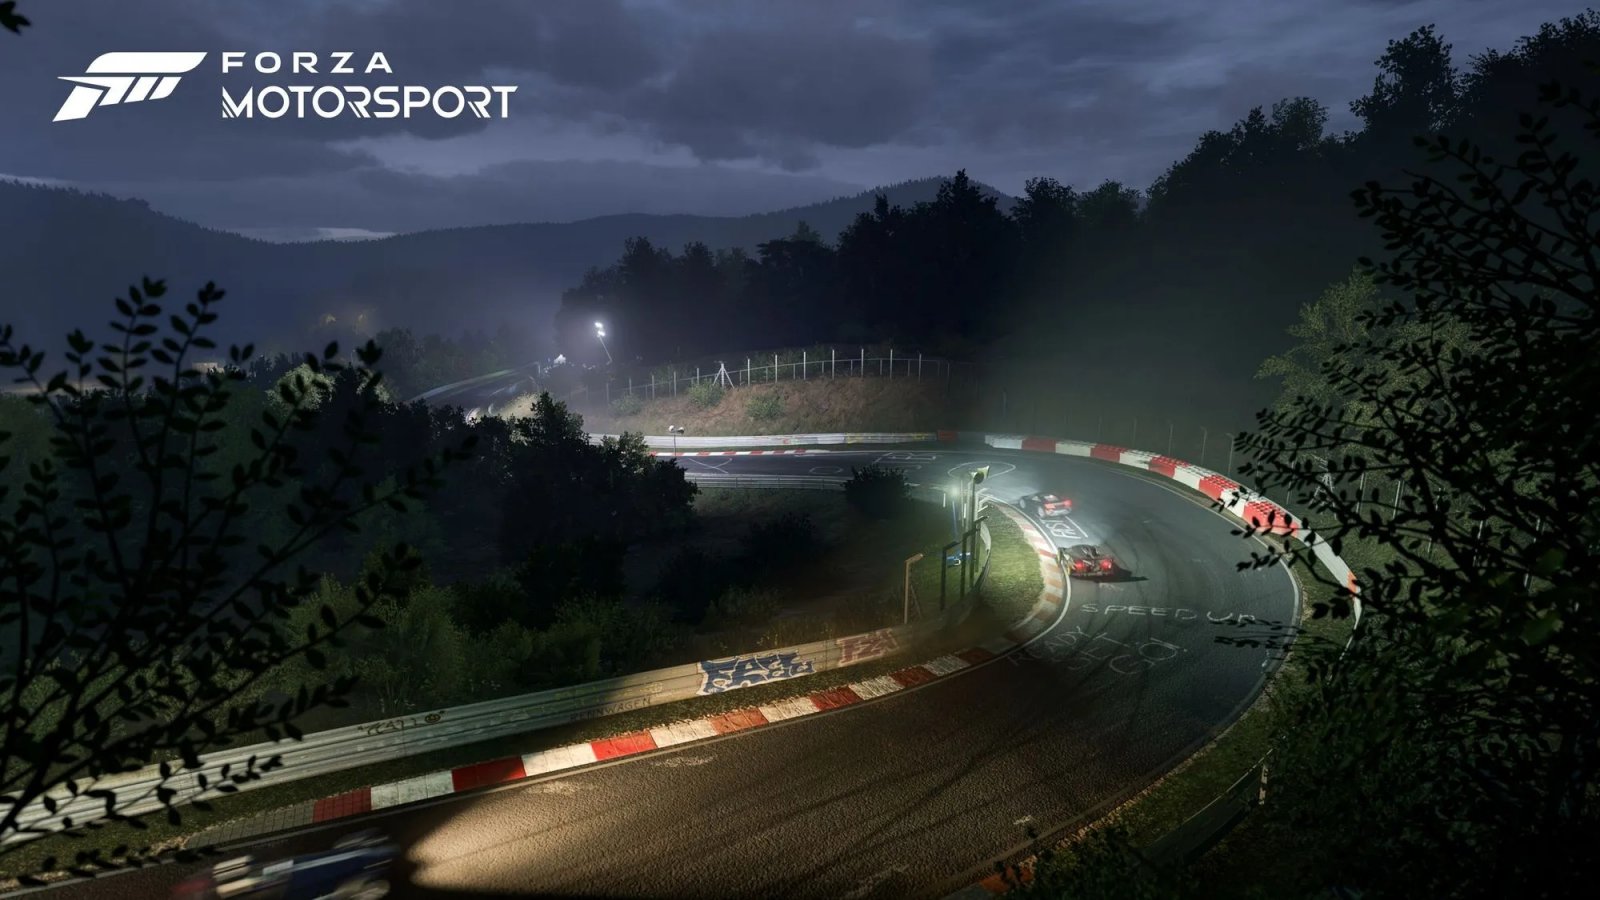 Forza Motorsport: l'Update 5 aggiunge il circuito Nürburgring Nordschleife e altro